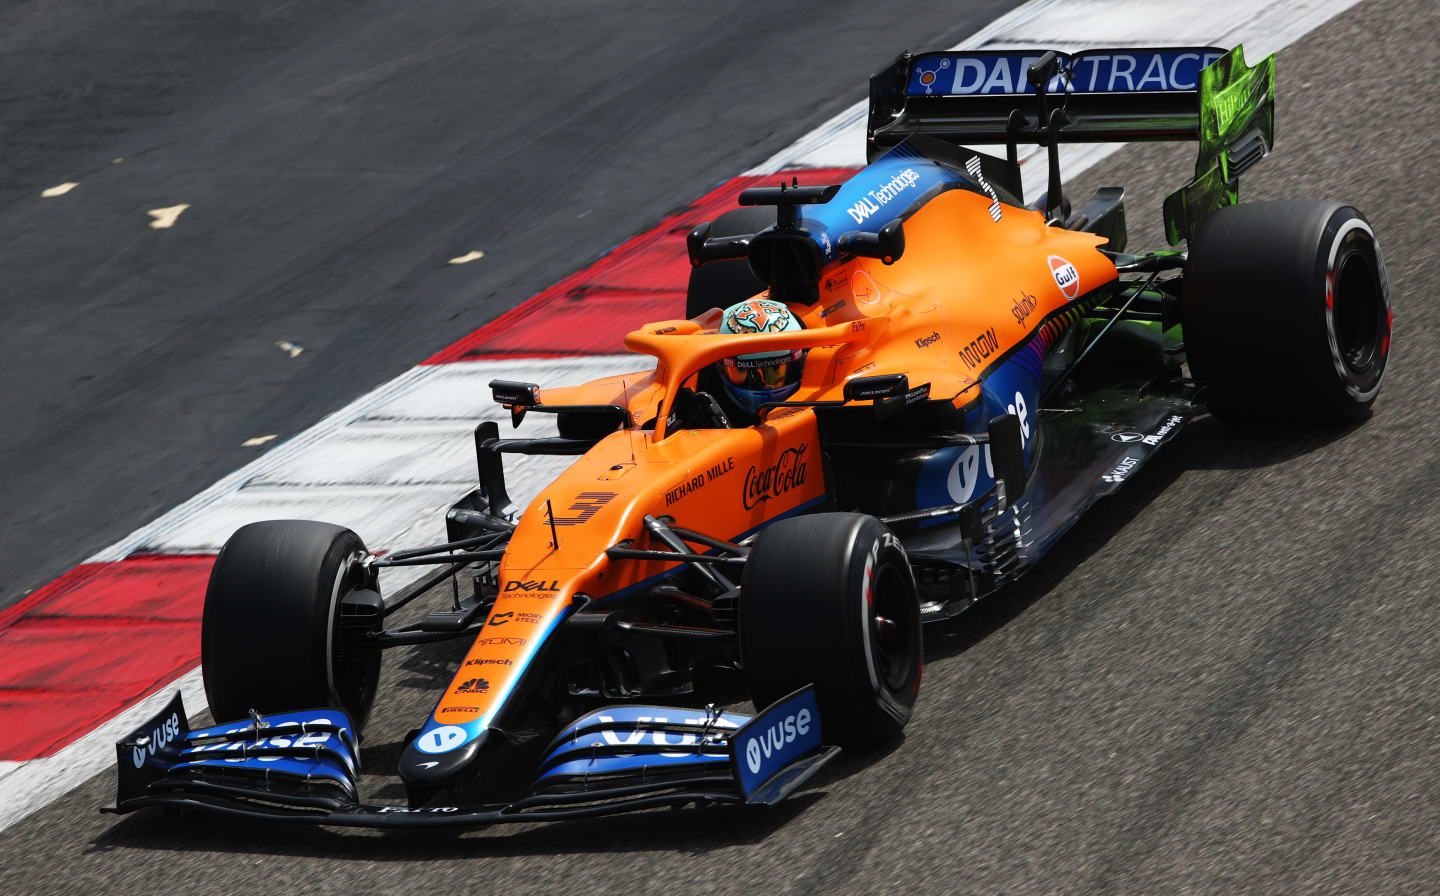 Daniel Ricciardo has swapped Renault for McLaren for this season